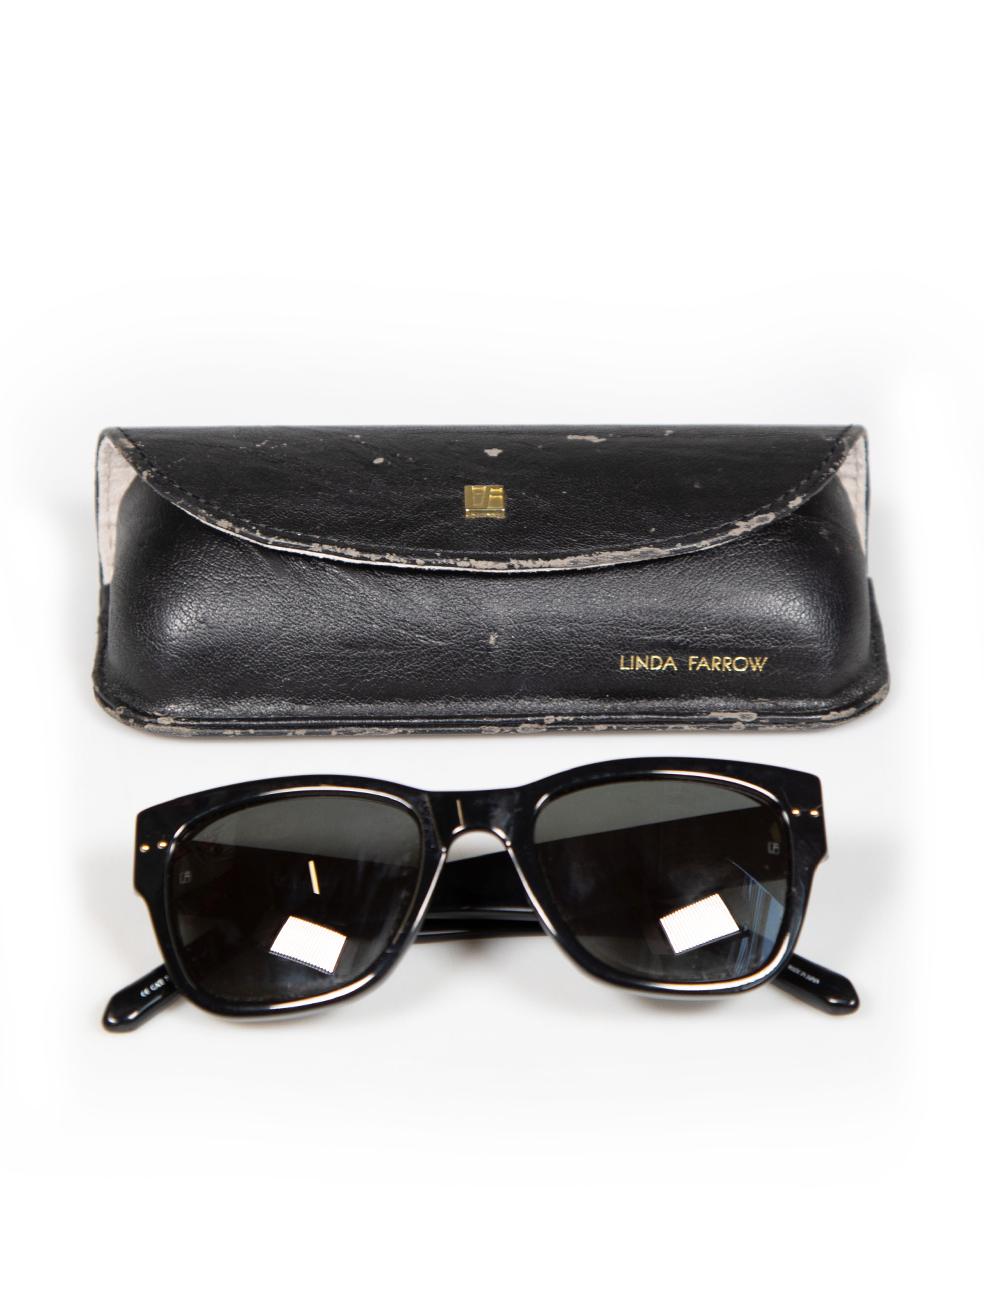 Linda Farrow Black Wayfarer Sunglasses For Sale 1